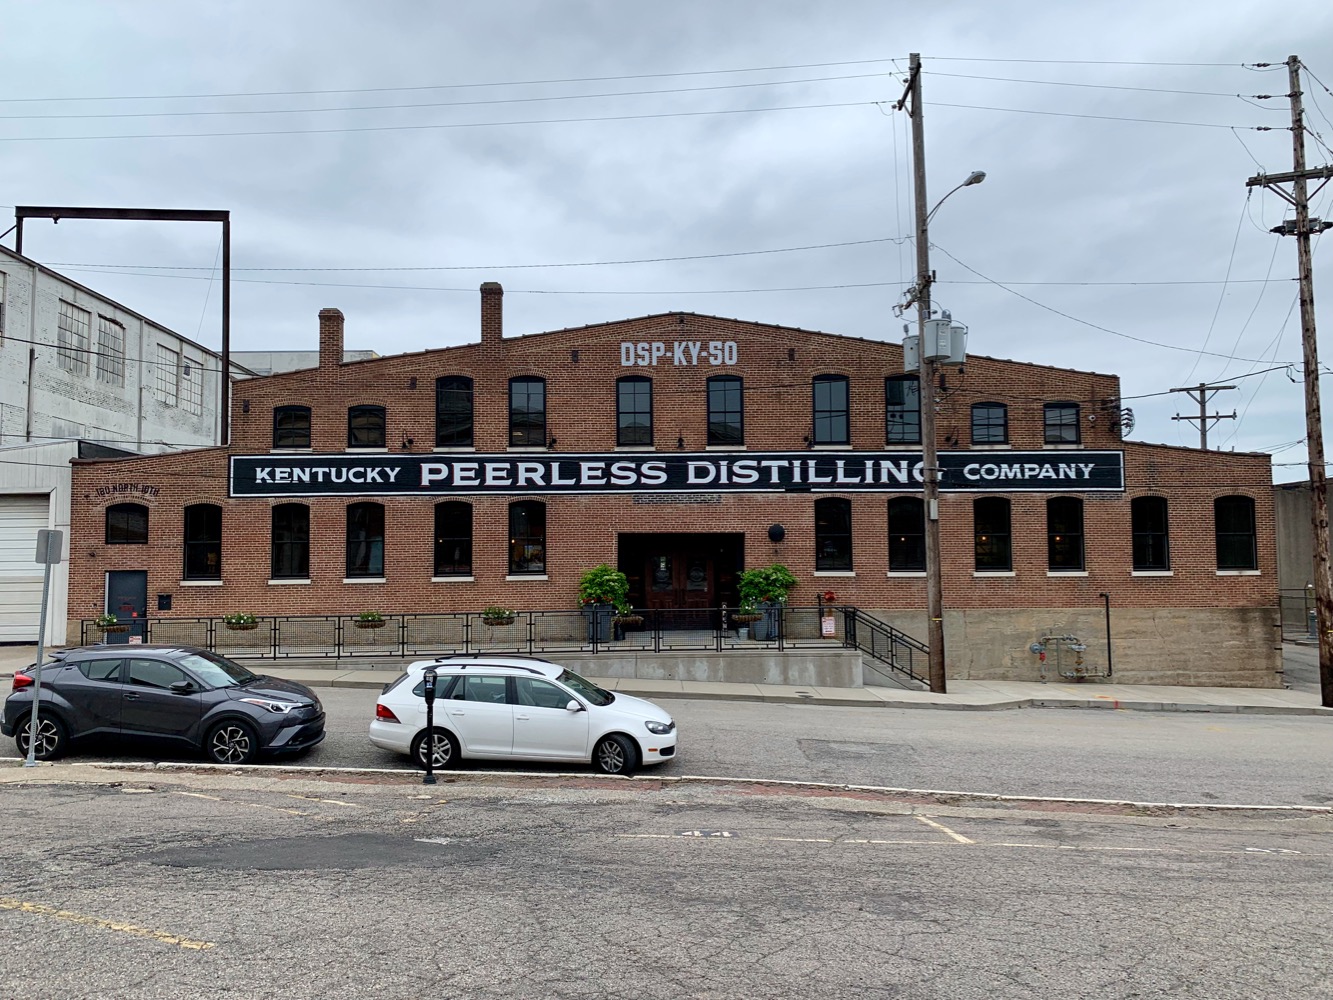 Kentucky Peerless Distilling Company